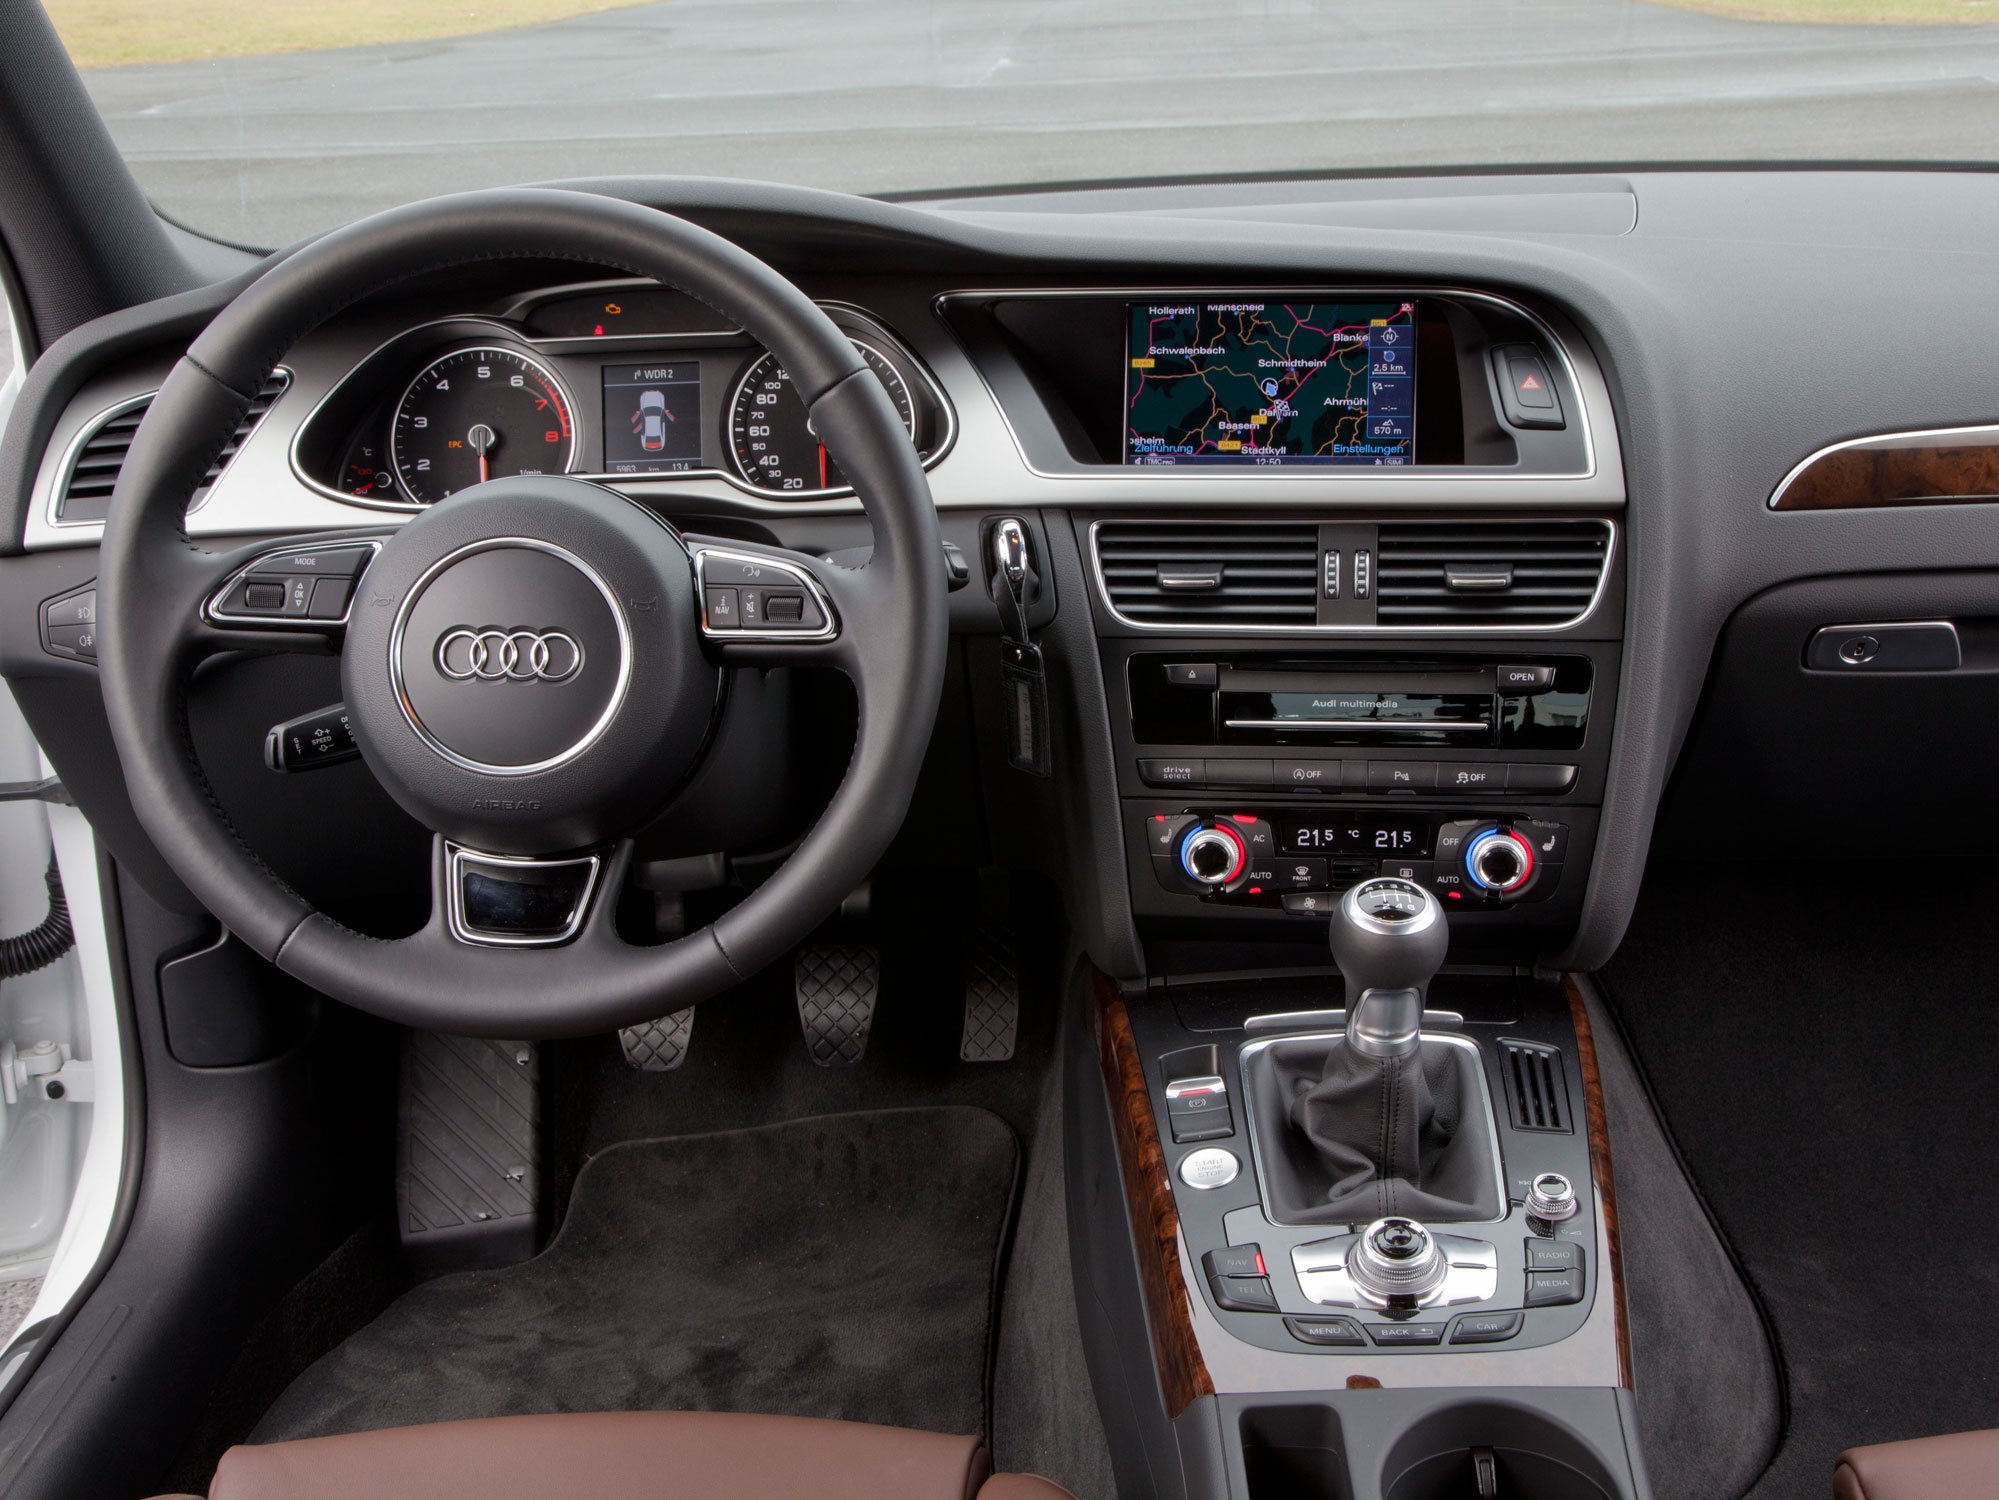 Audi A4 1 8 Tfsi Facelift 2012 Im Test Autozeitung De